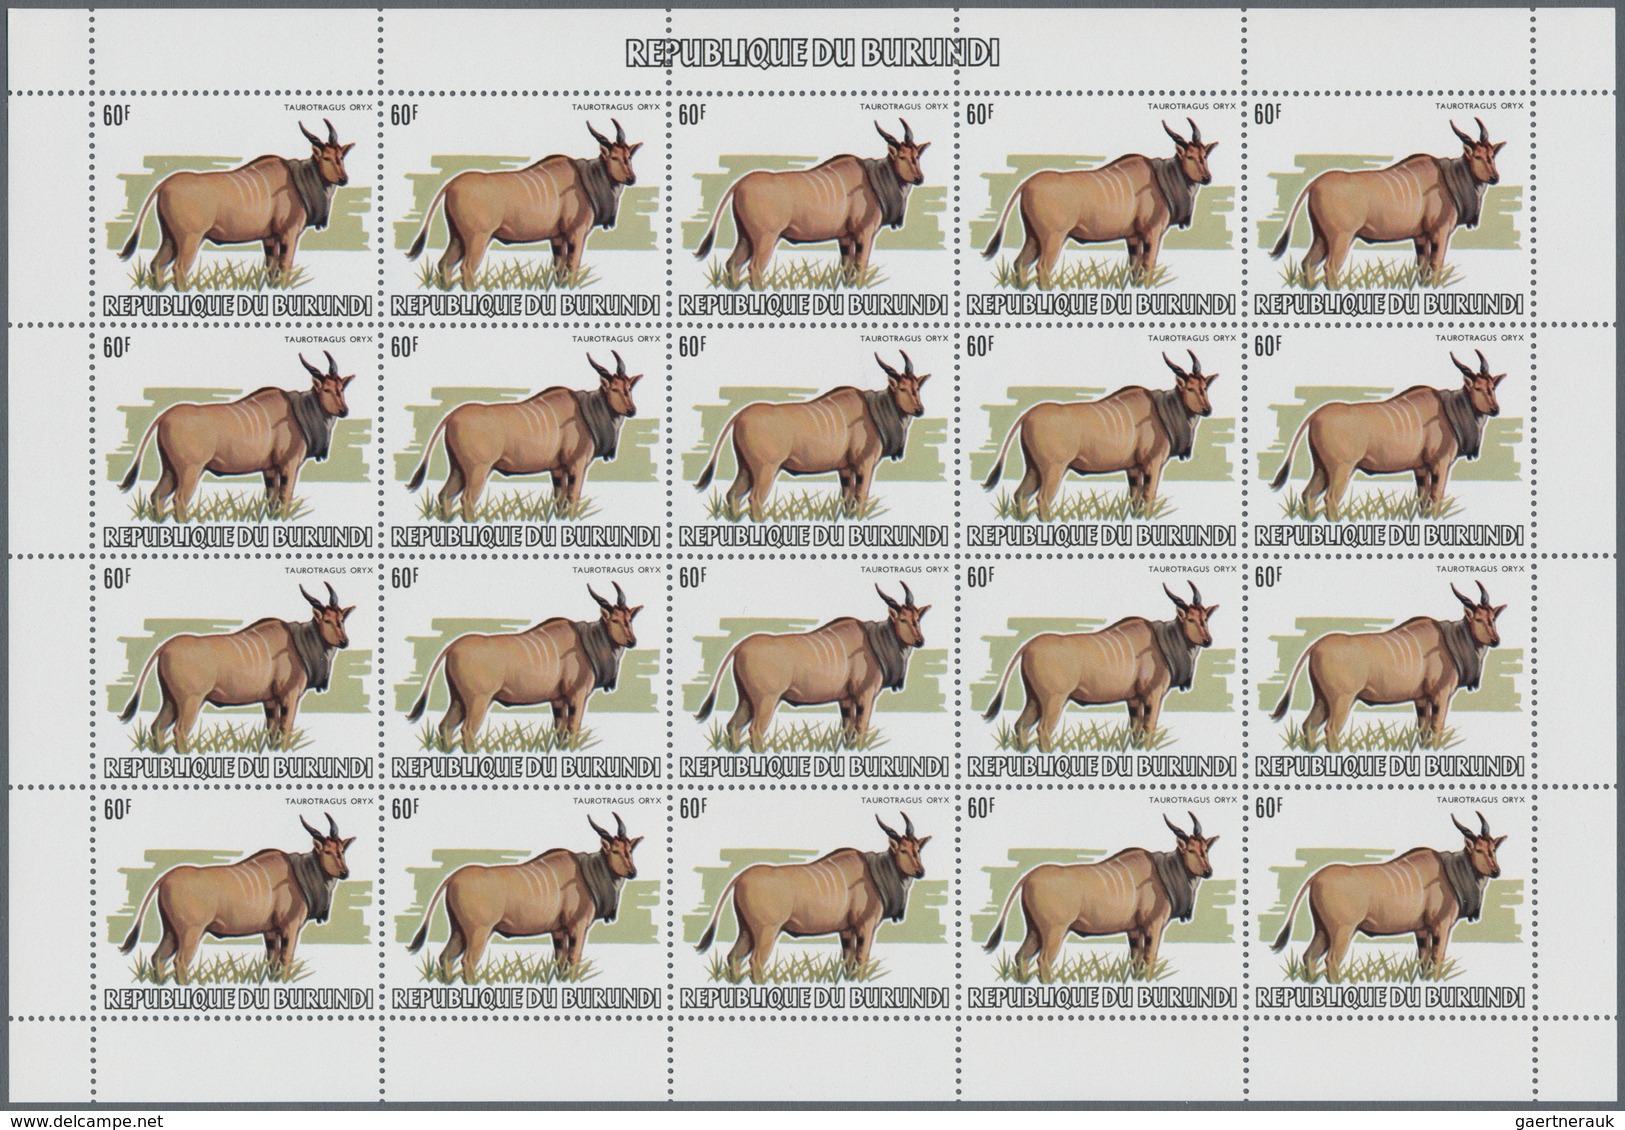 00672 Thematik: Tiere, Fauna / animals, fauna: 1982, Burundi. ANIMALS. Set of 13 values in complete sheets